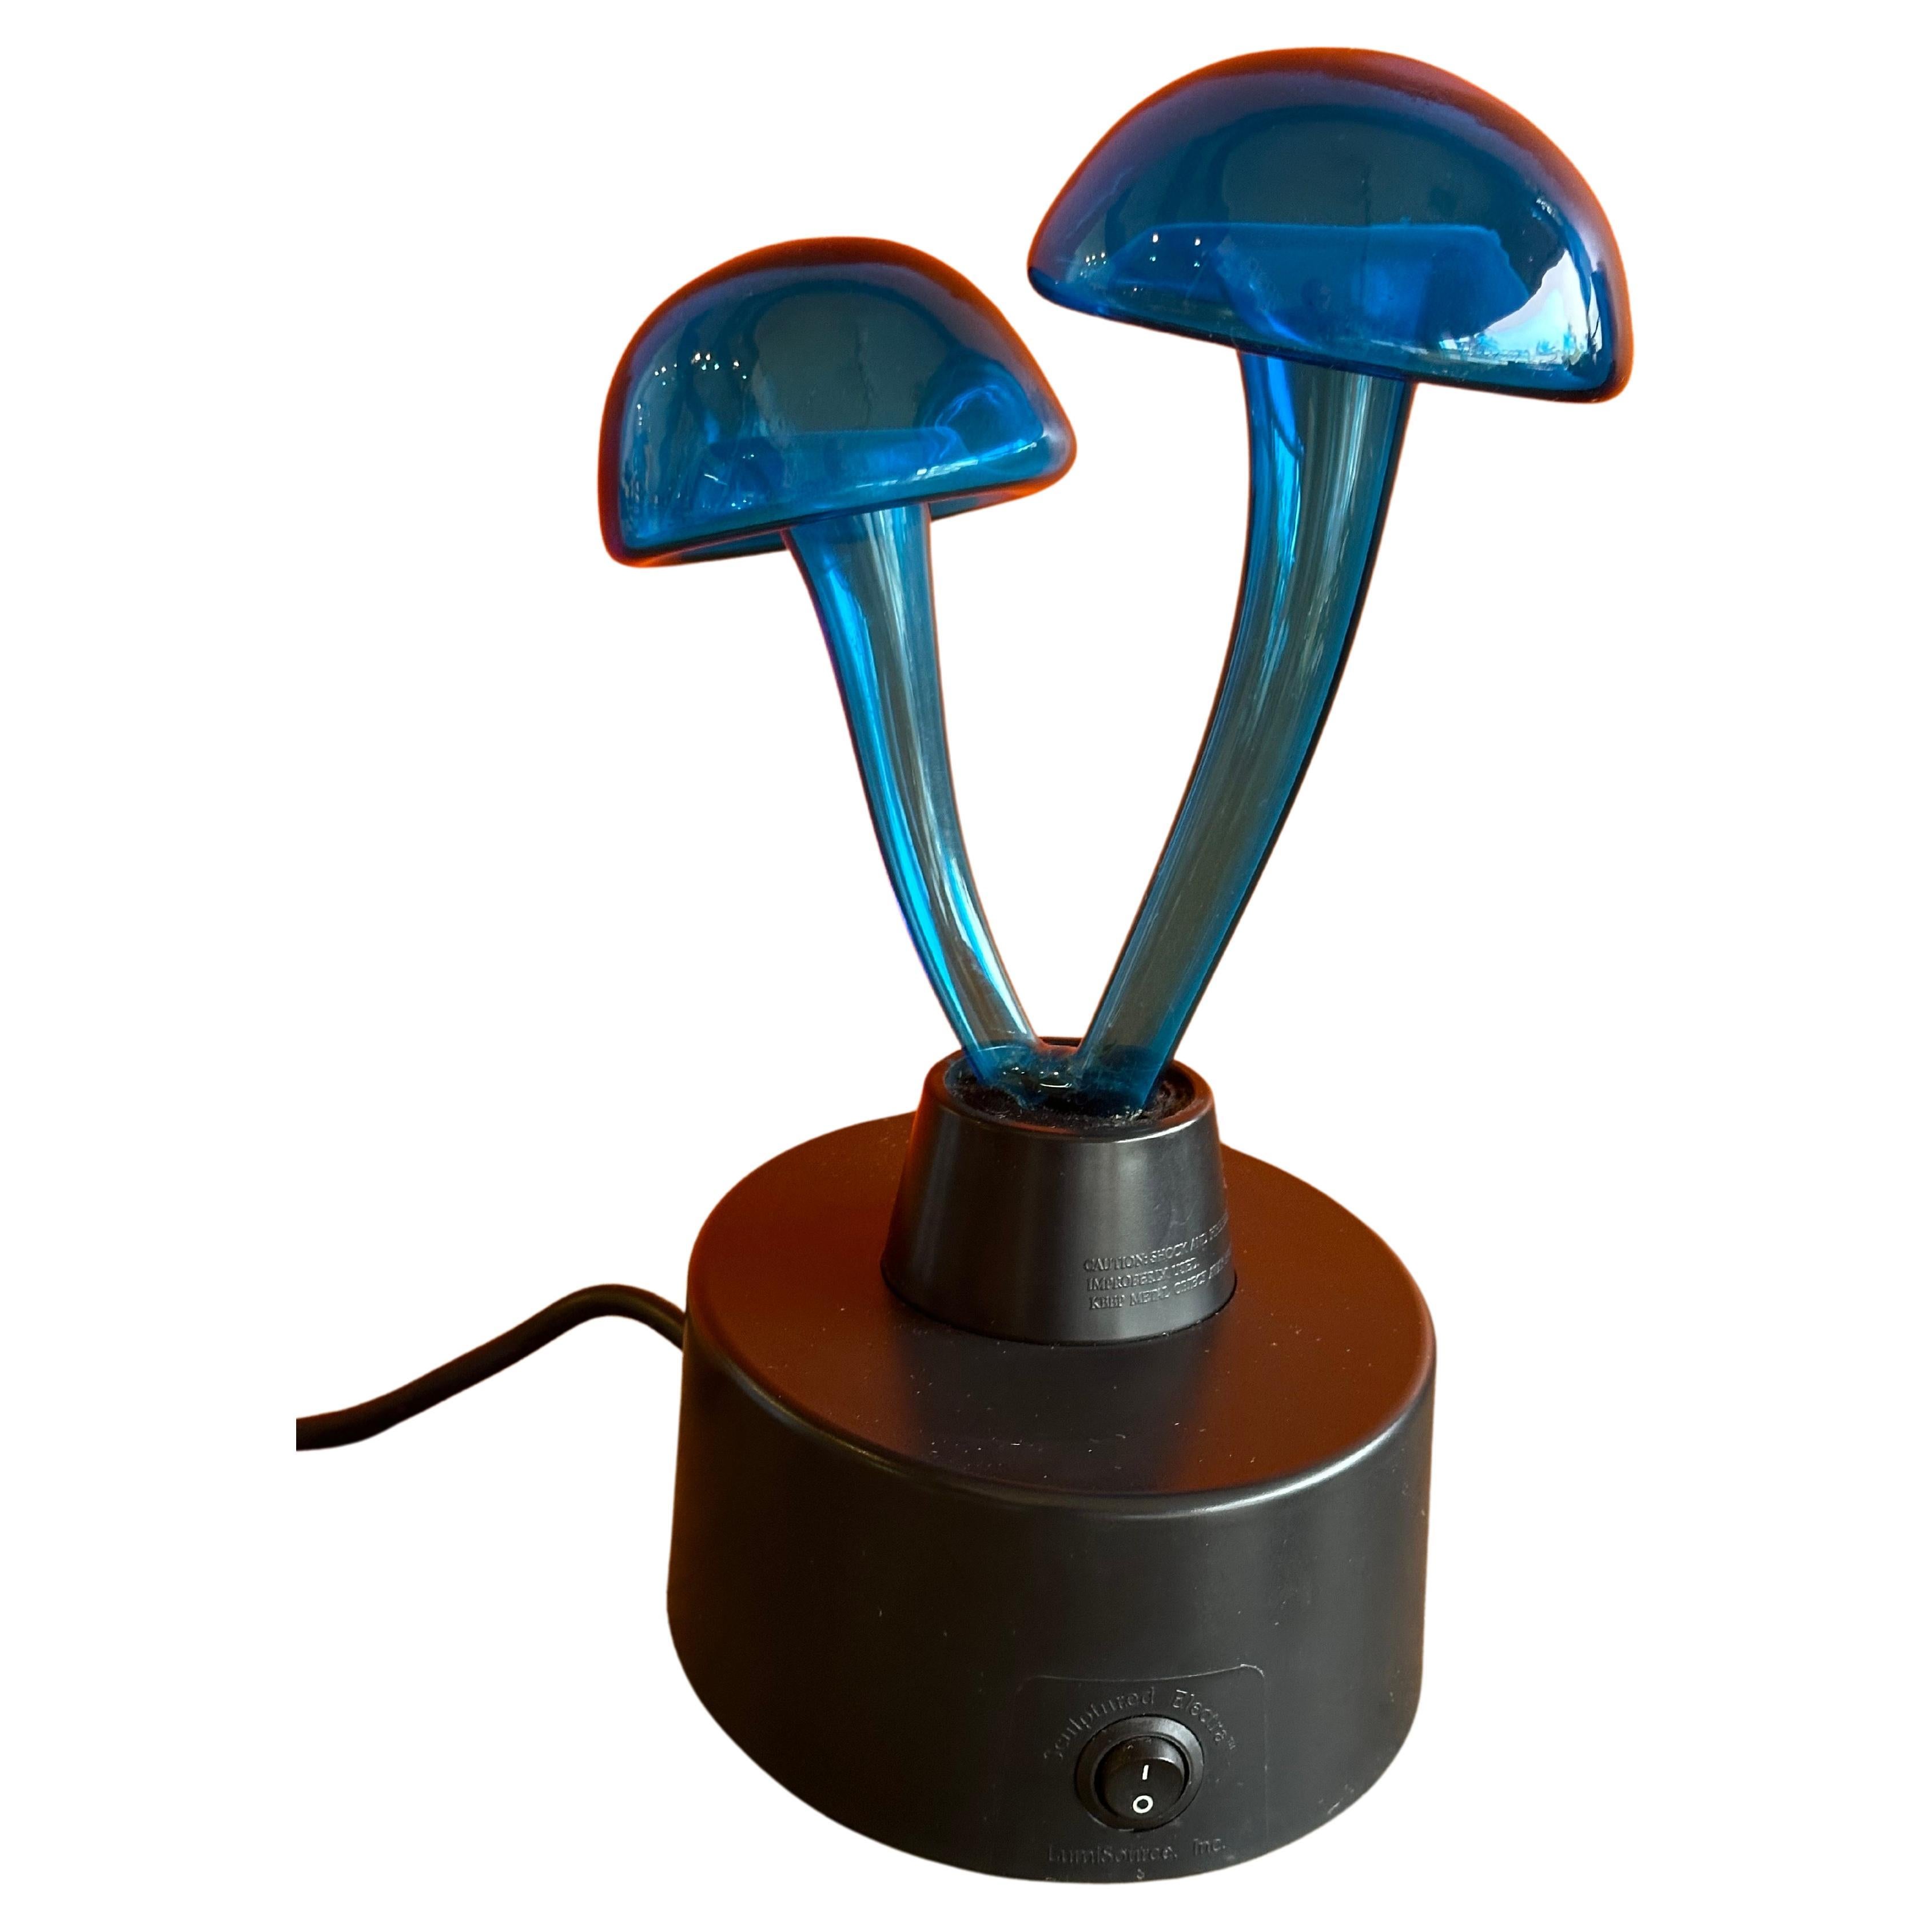 "Organic Electra" Mushroom Plasma Lamp by Lumisource